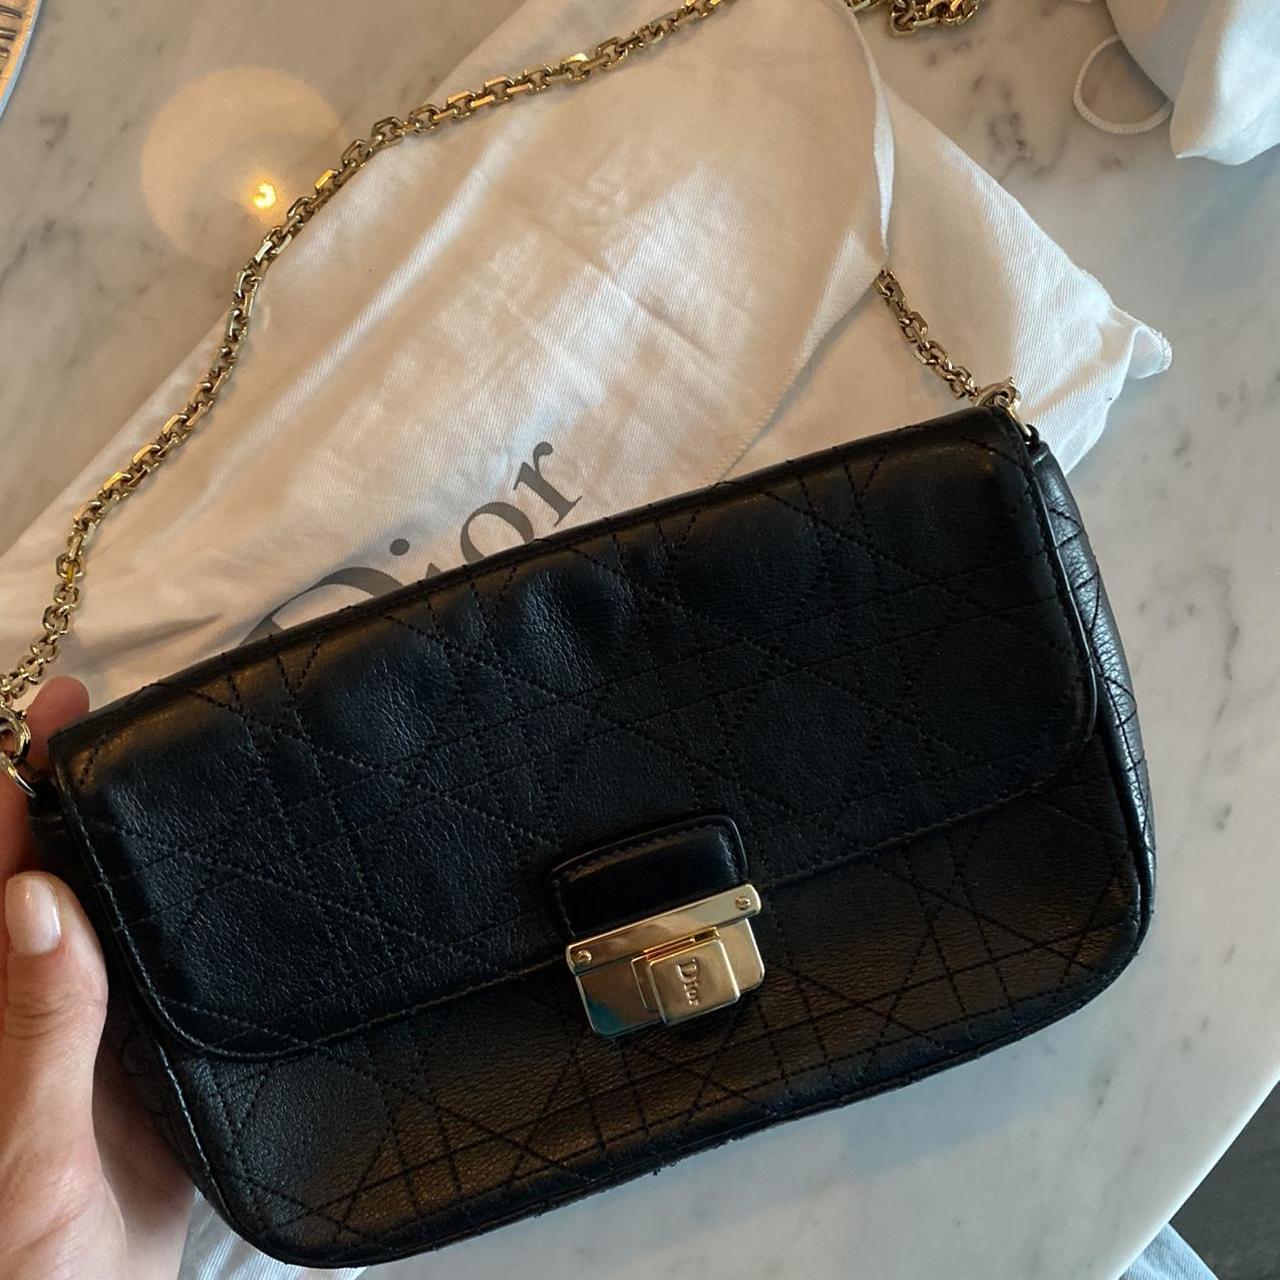 Christian Dior Women's Black and Gold Bag | Depop